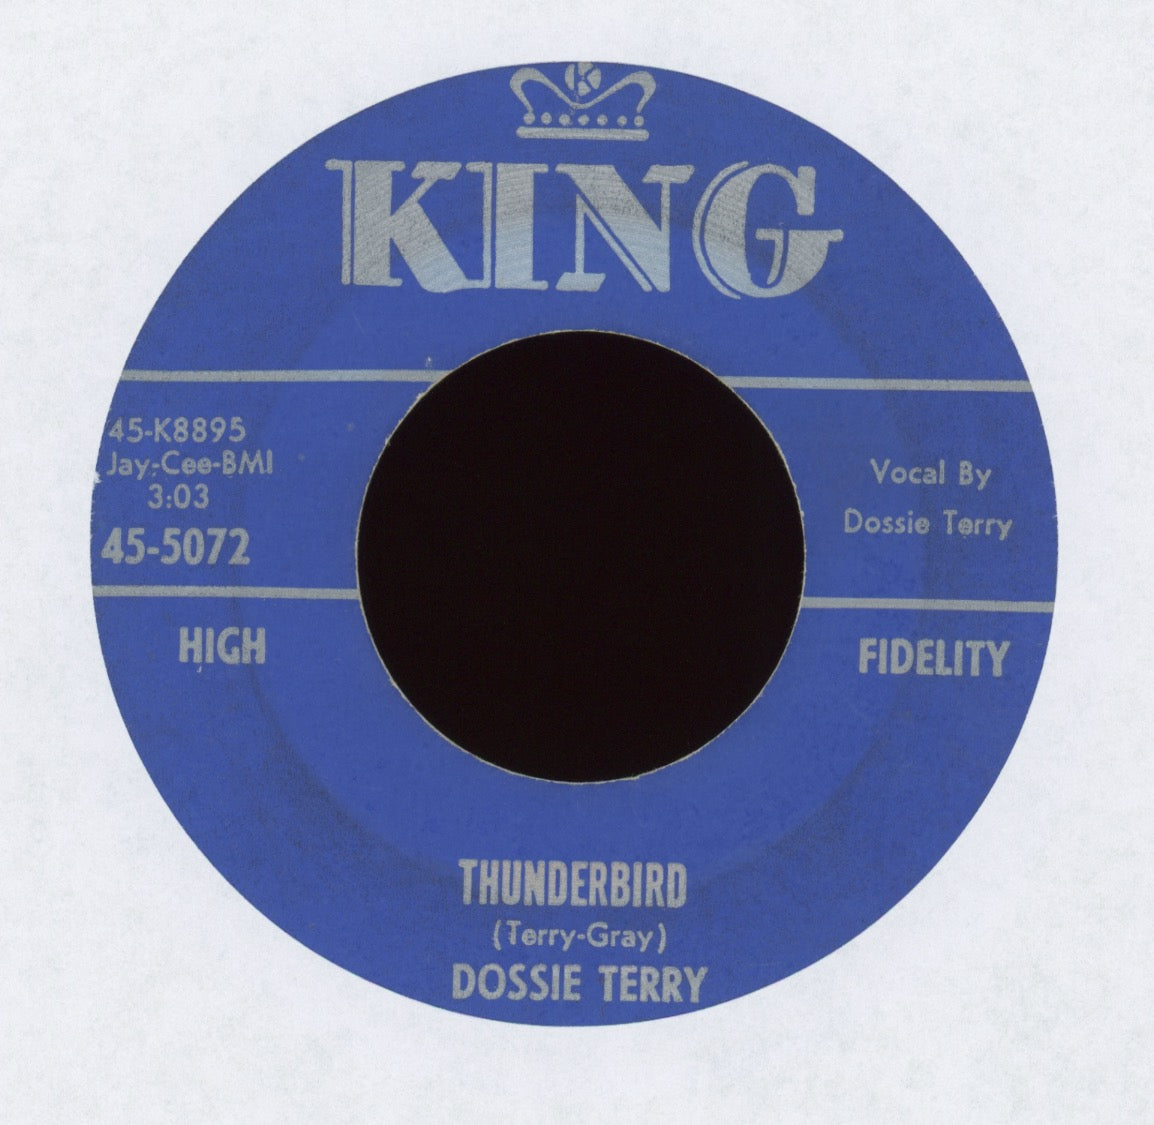 Dossie Terry - Thunderbird on King